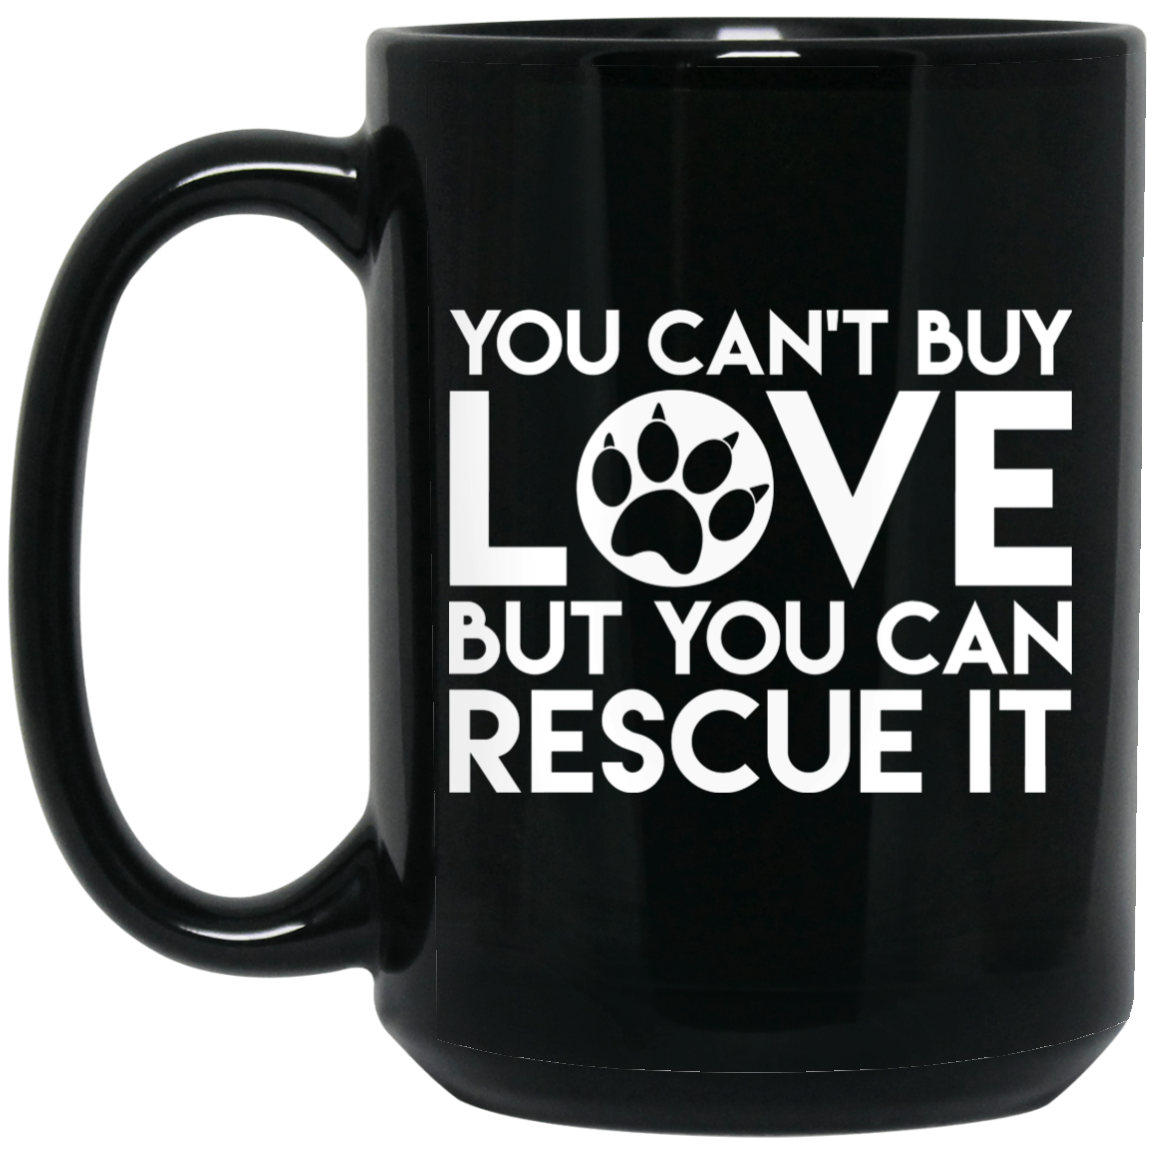 Can't Buy Love - Black Mugs